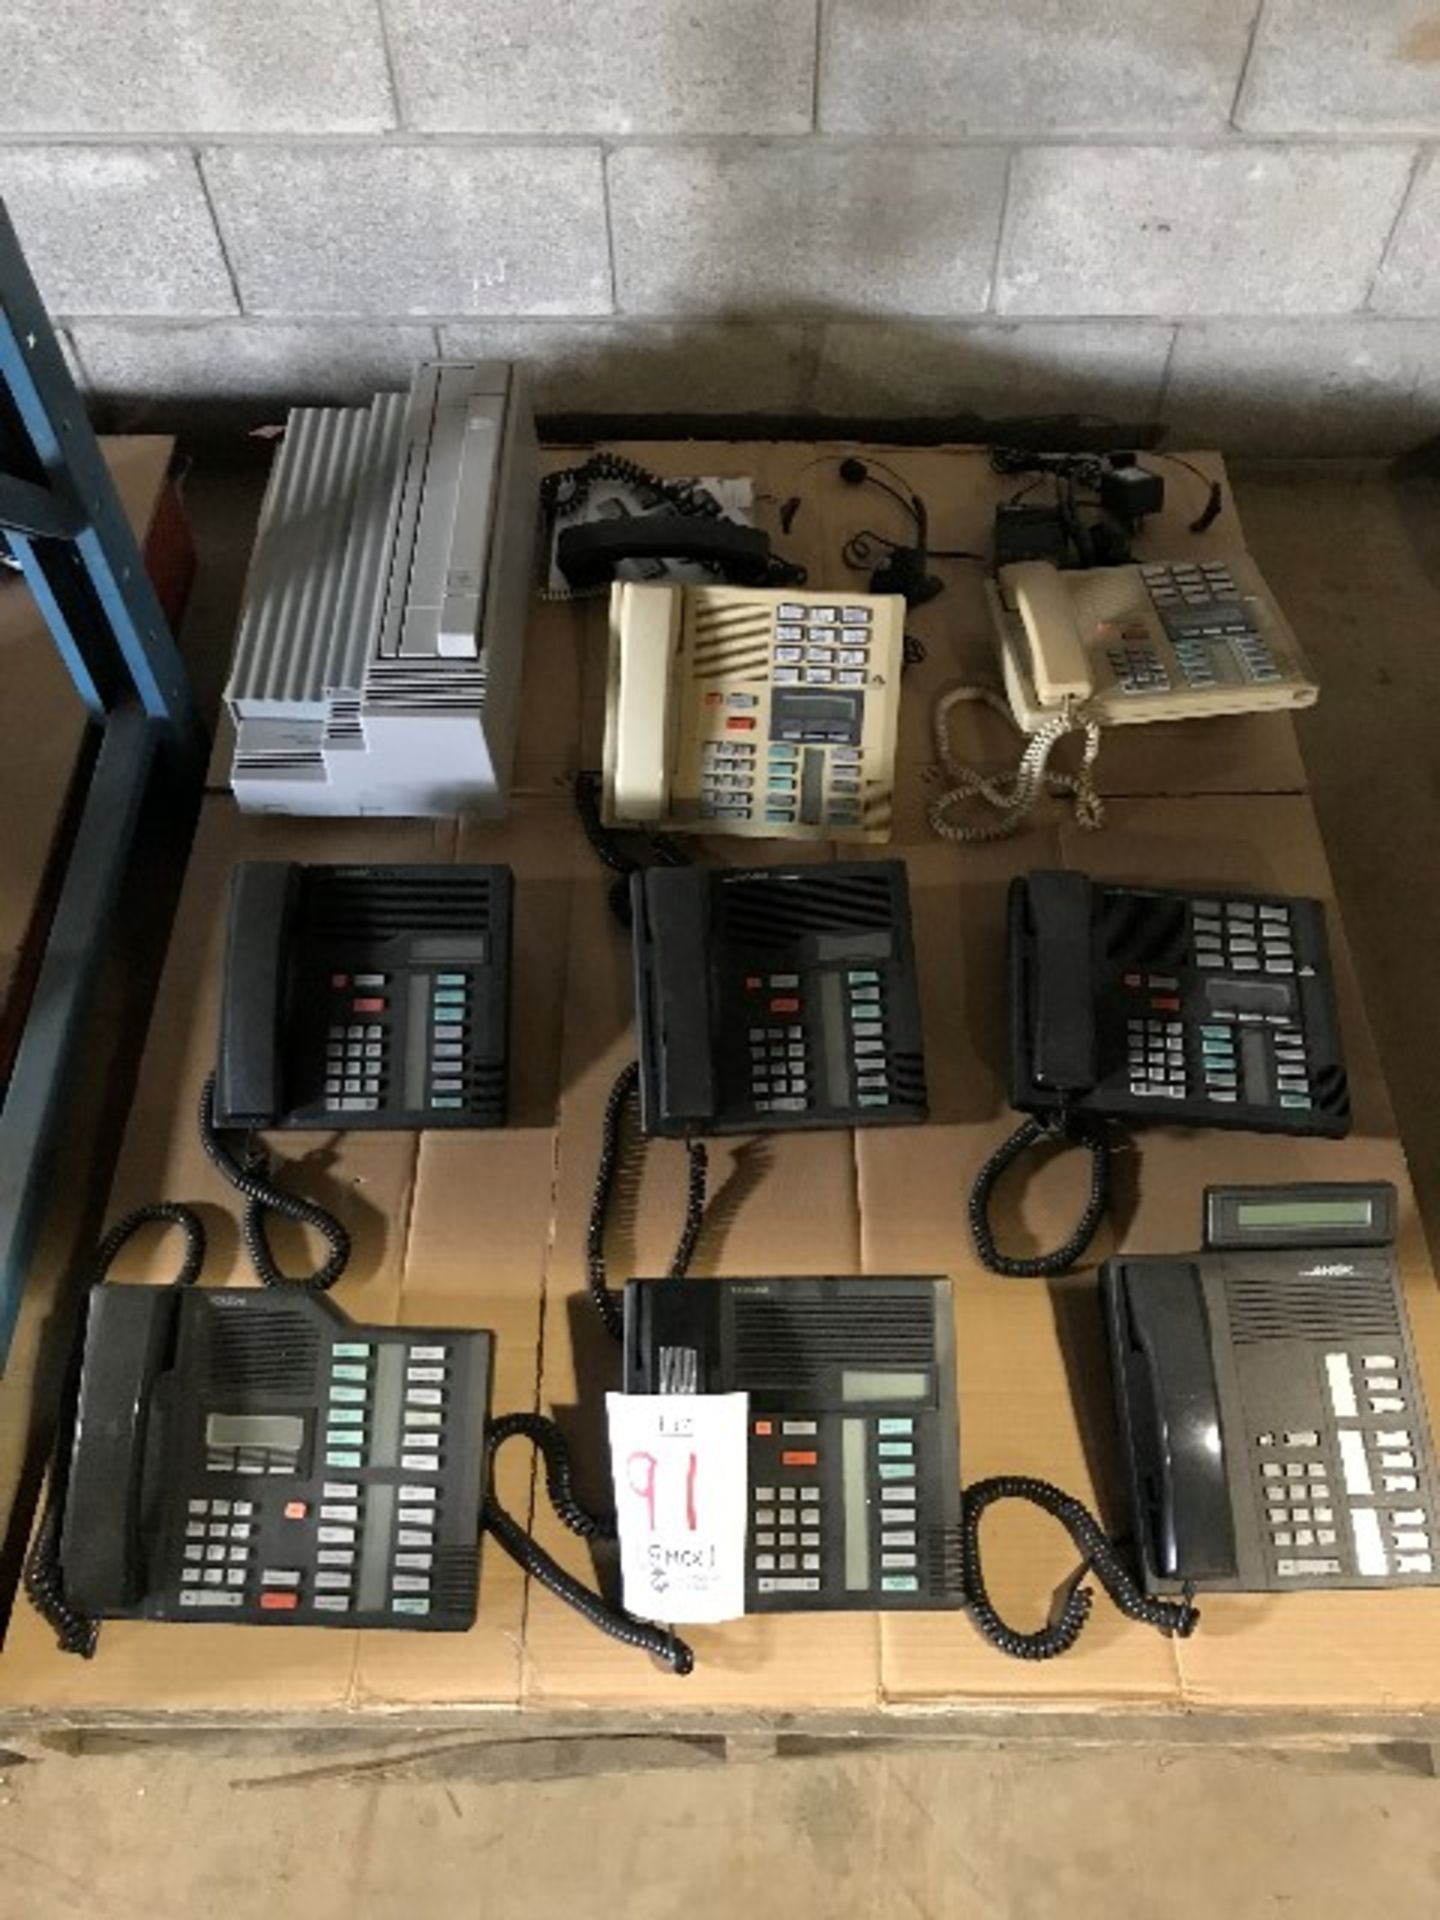 Phone system - telephones, module, etc... (x 8pcs)